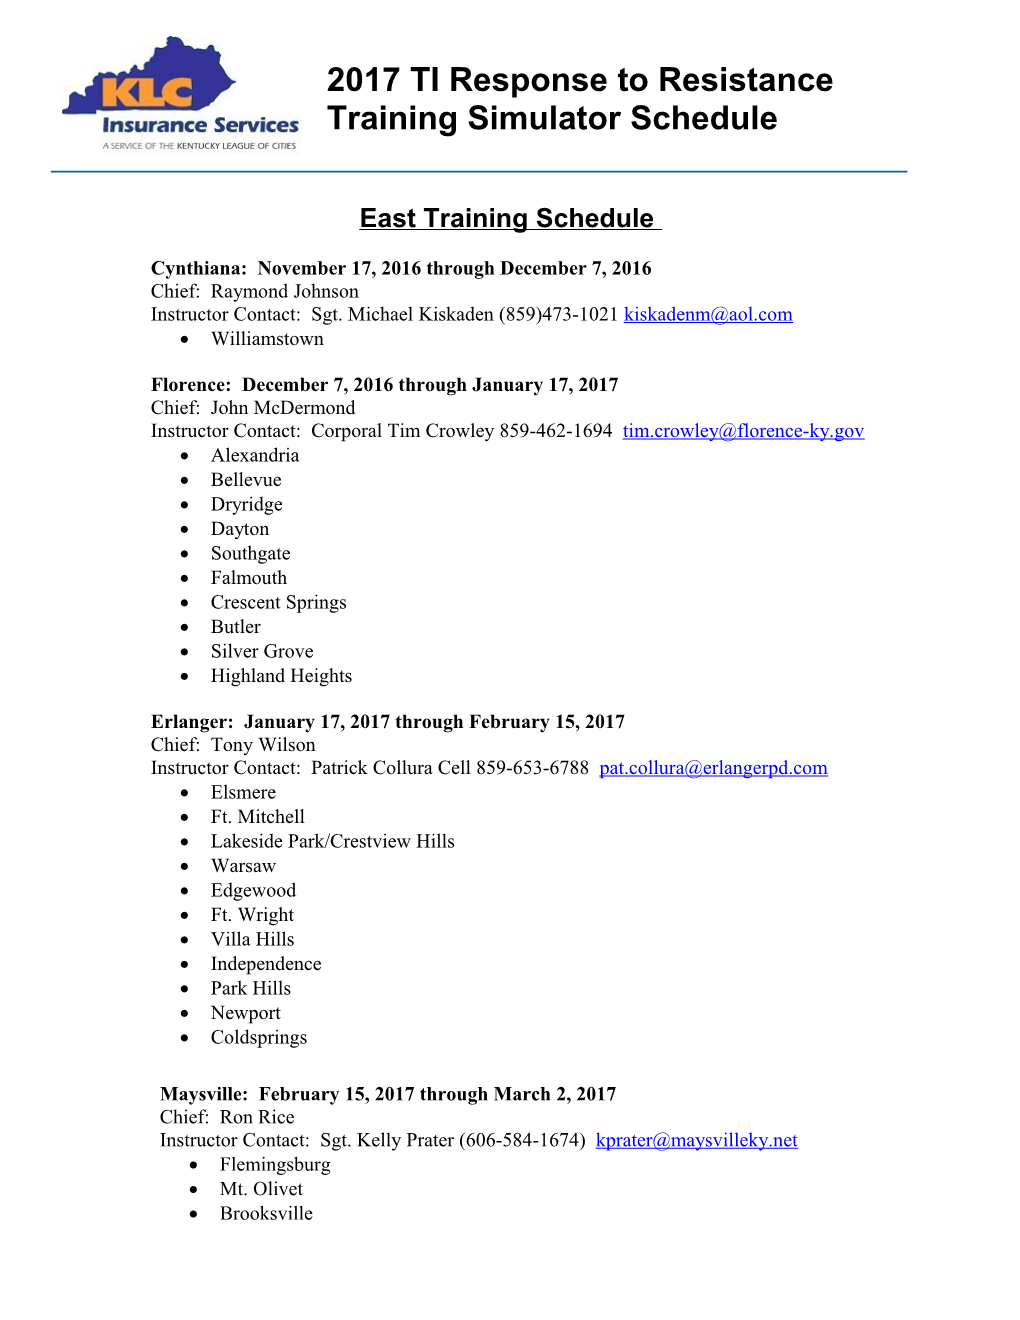 East Training Schedule